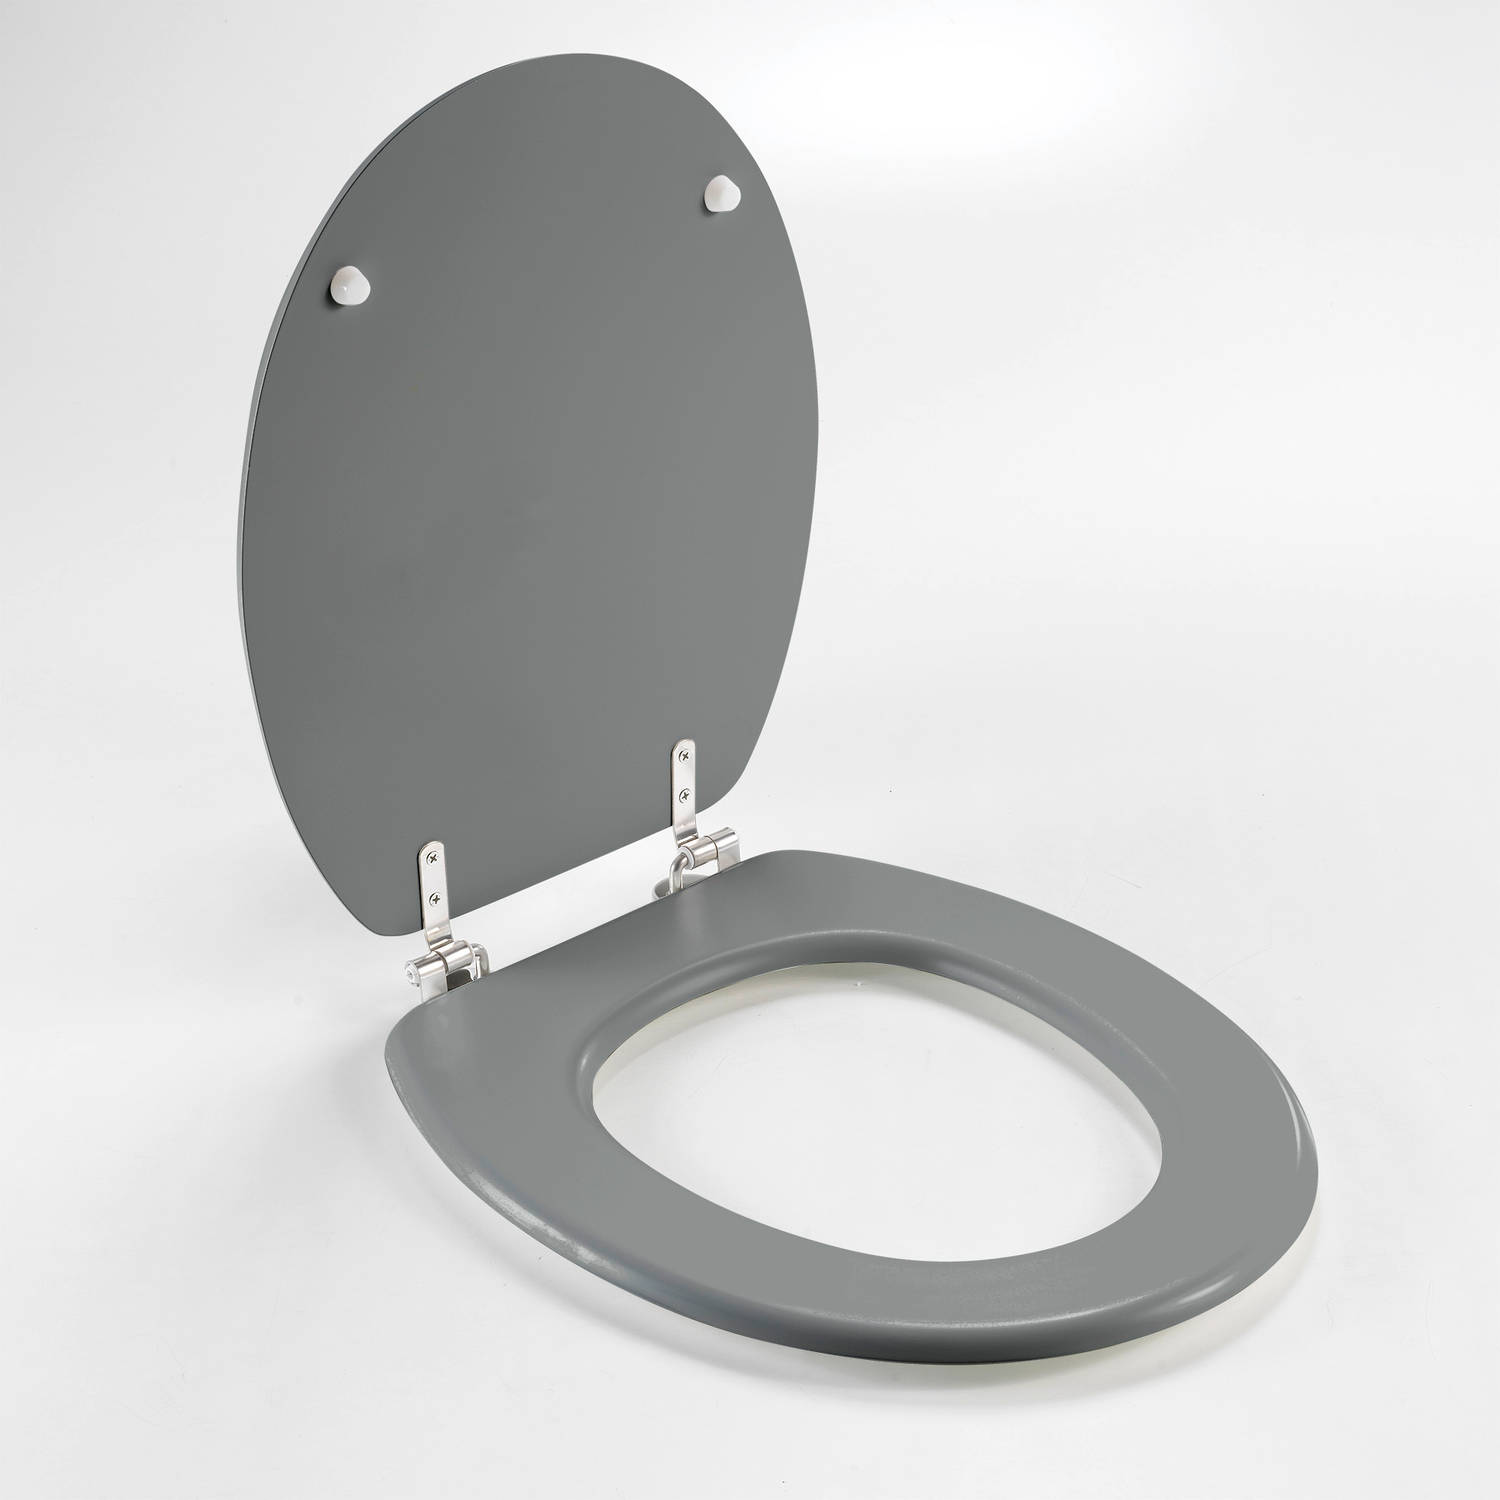 Wicotex-Toiletbril-WC bril MDF mat grijs inclusief metallic scharnieren.